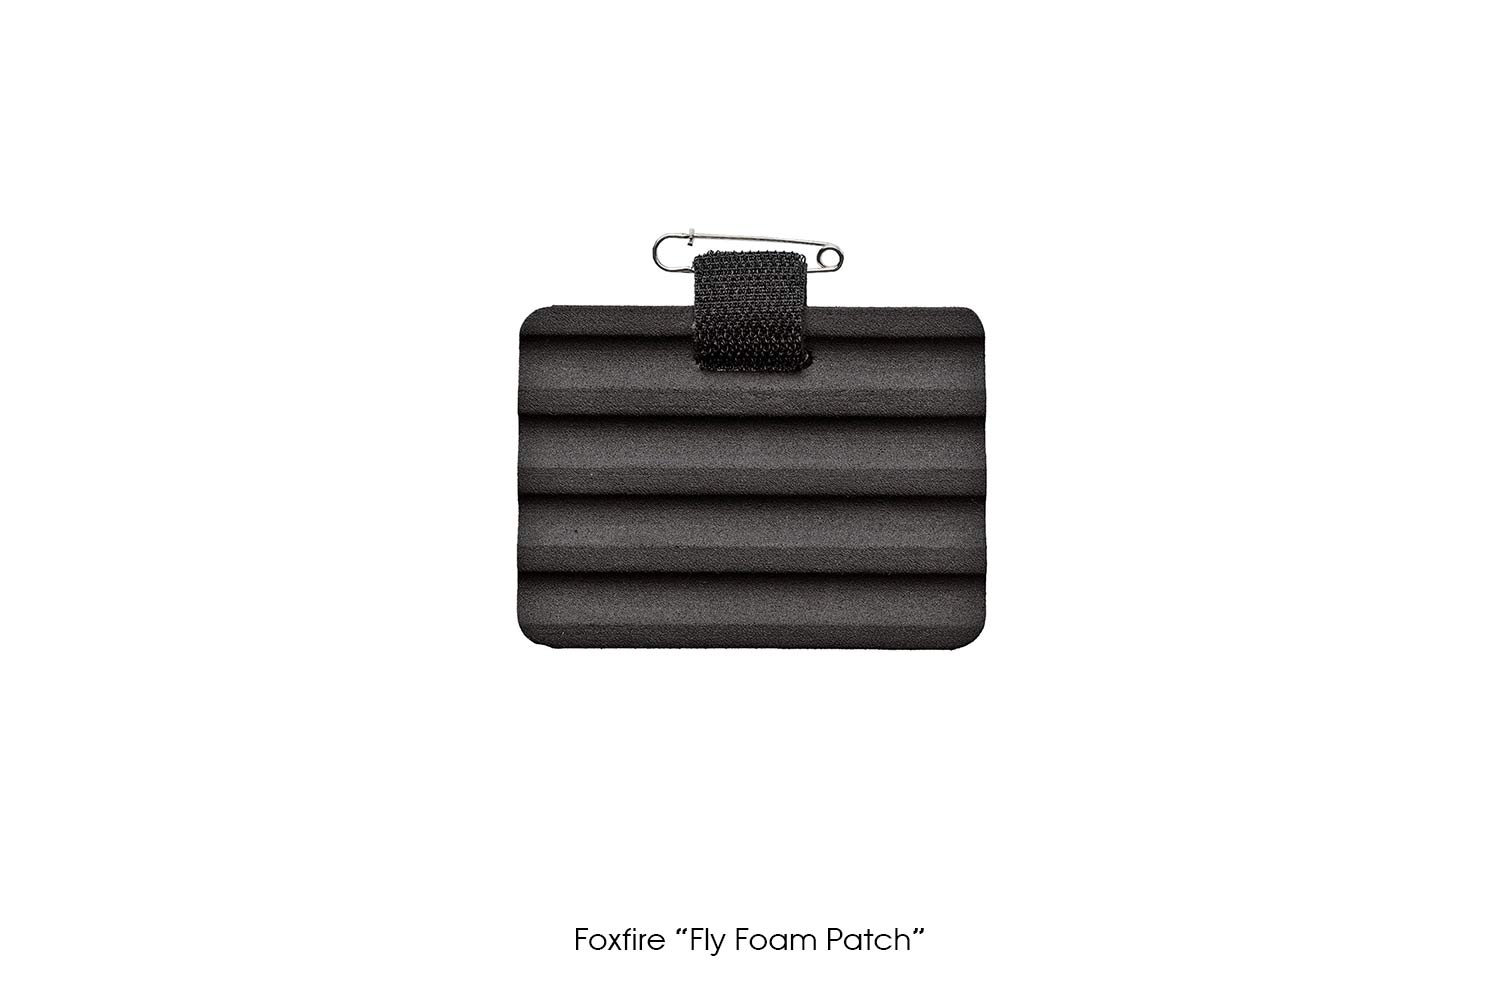 Foxfire "Fly Form Patch"